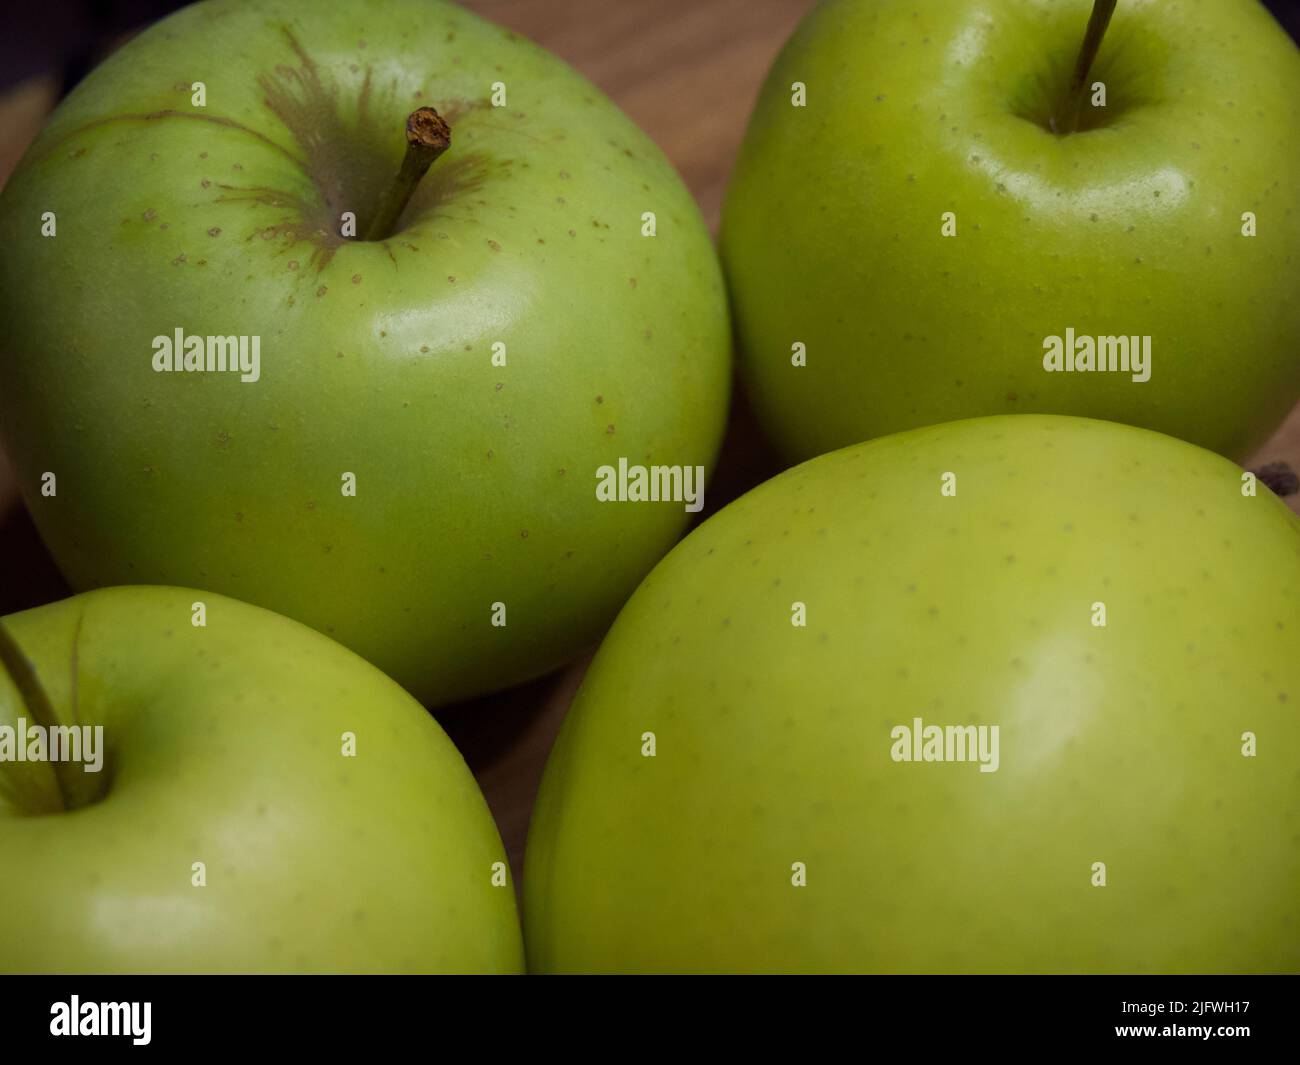 Renet simirenko green apples, top view, close-up. Macro shot of fruit. Stock Photo